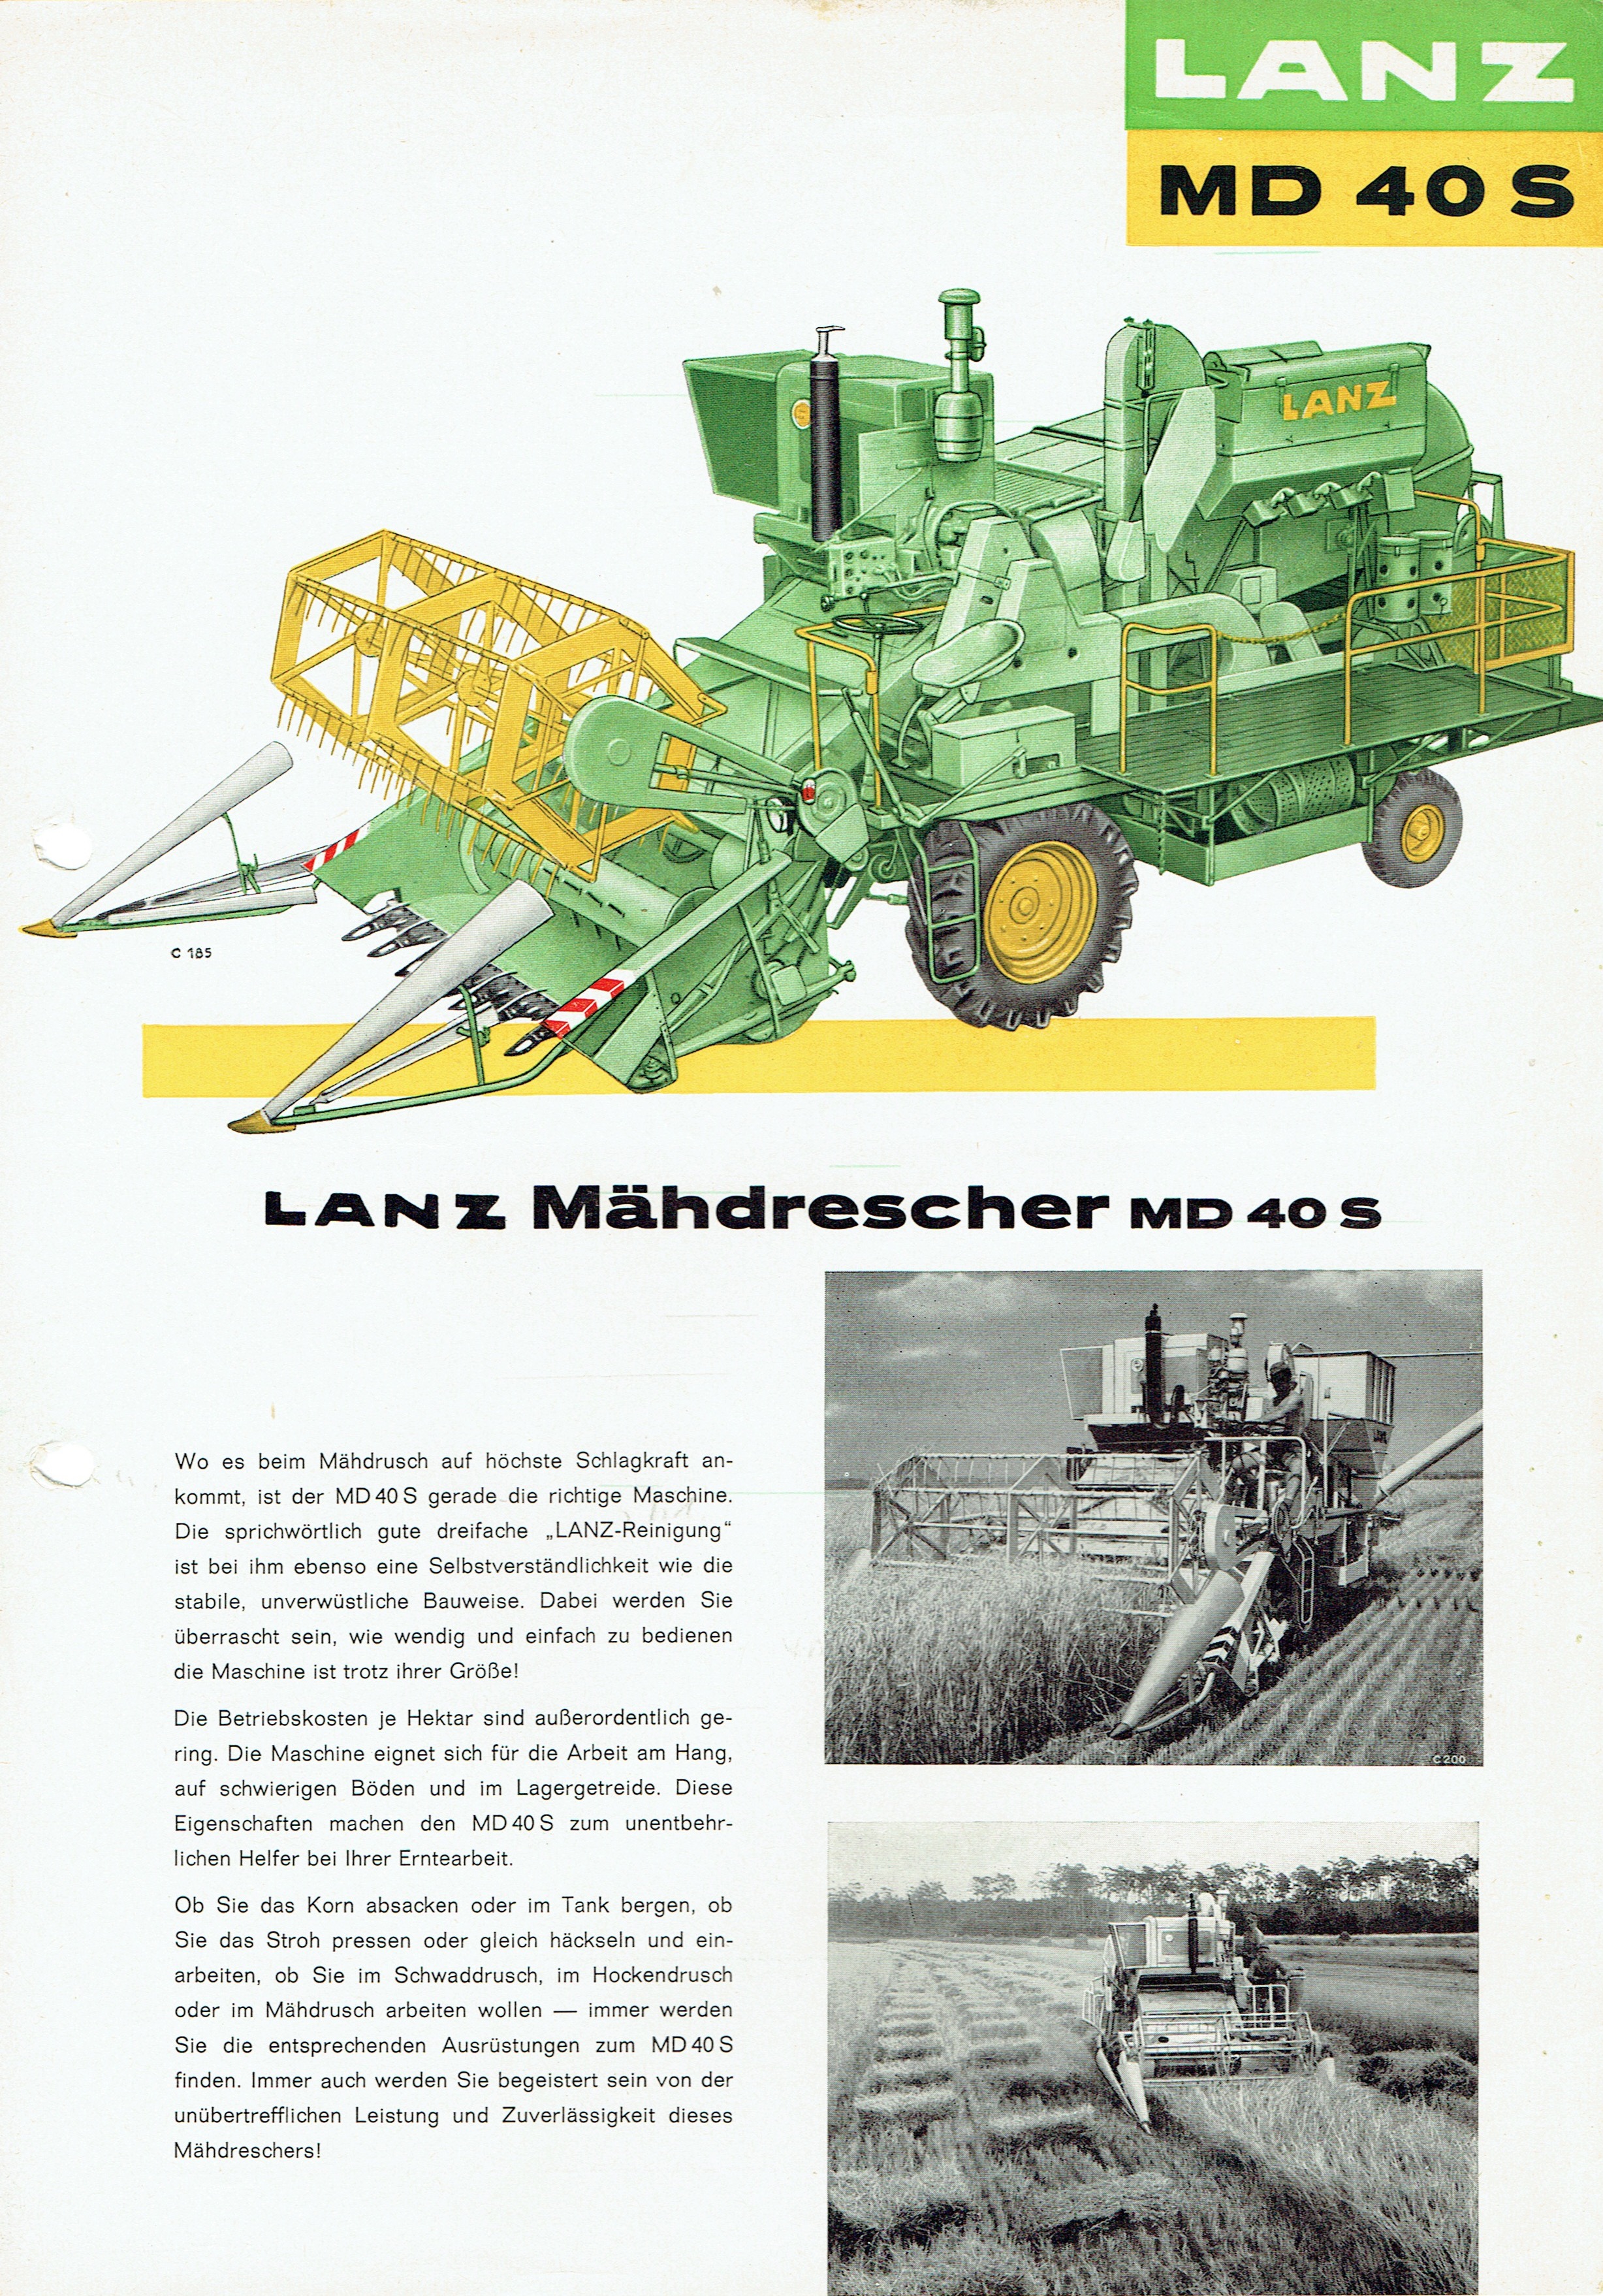 LANZ MD40S (Mähdrescherarchiv Kühnstetter CC BY-NC-SA)